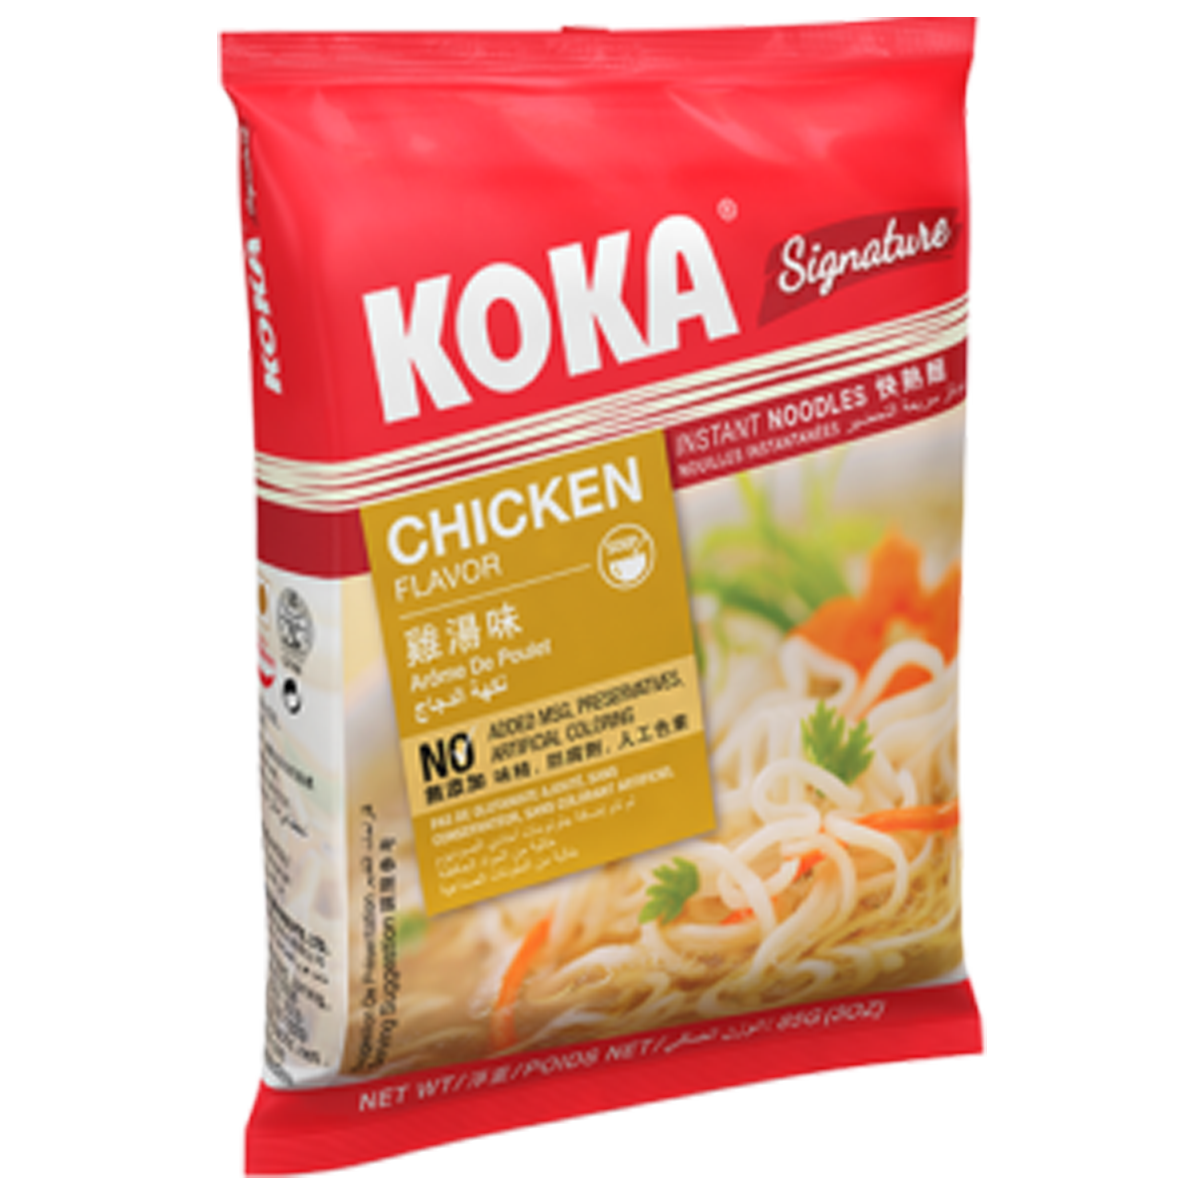 Koka Signature Chicken Flavor 85g